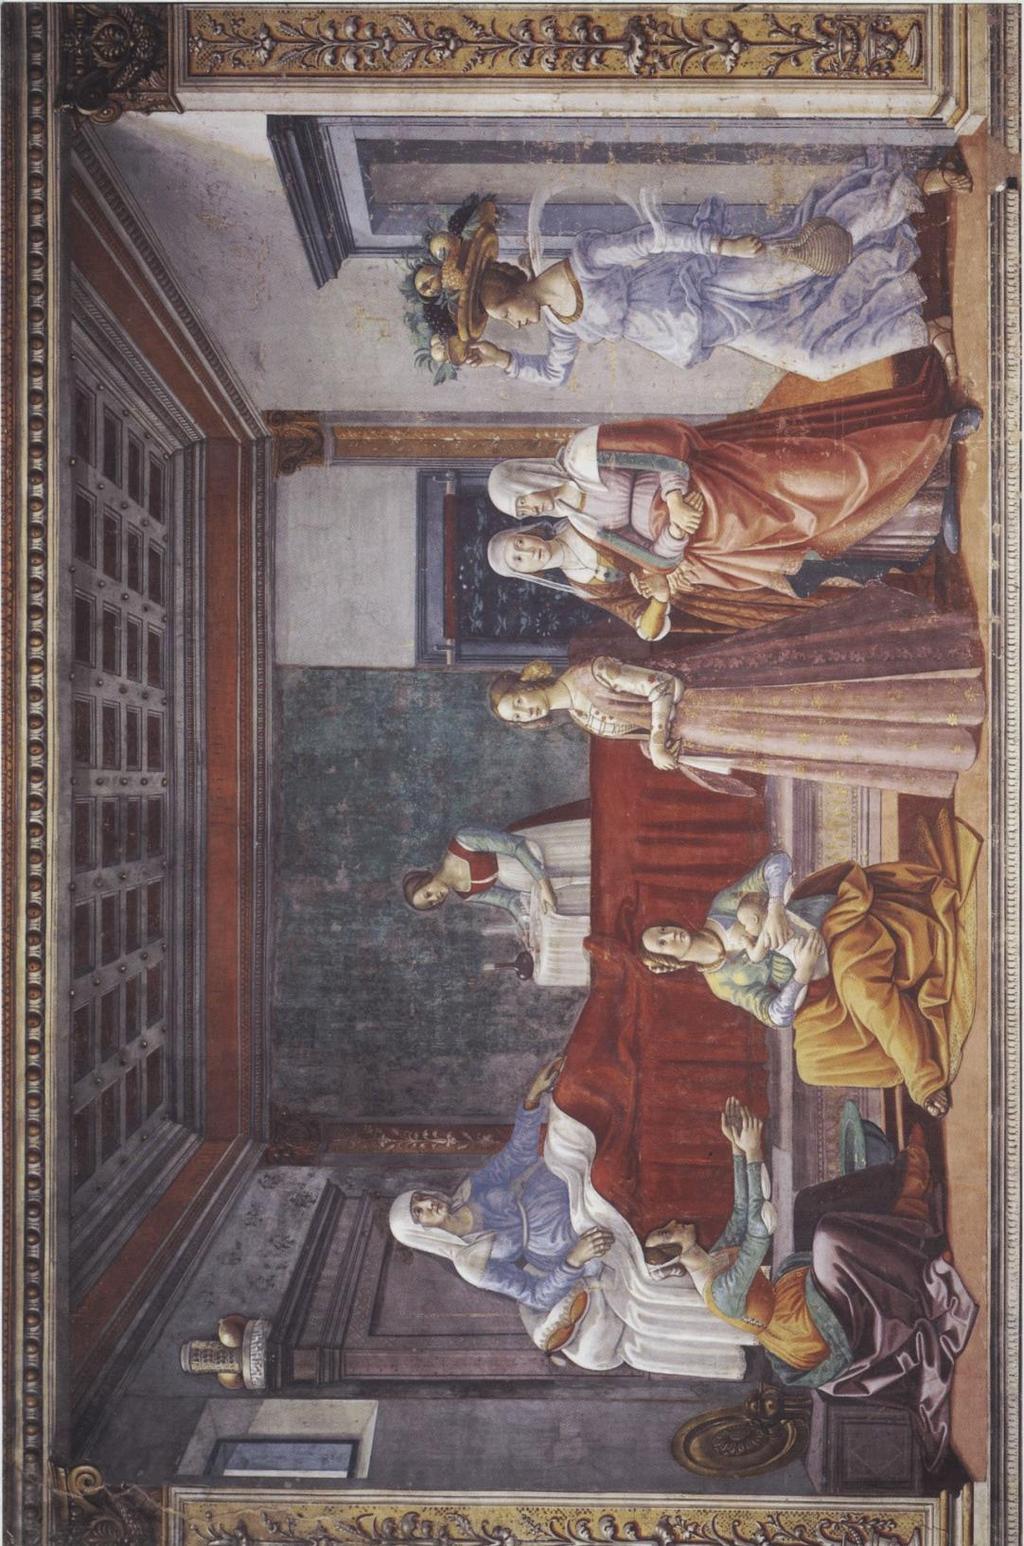 Plate 19: Domenico Bigordi called Ghirlandaio, and workshop, Birth of St.